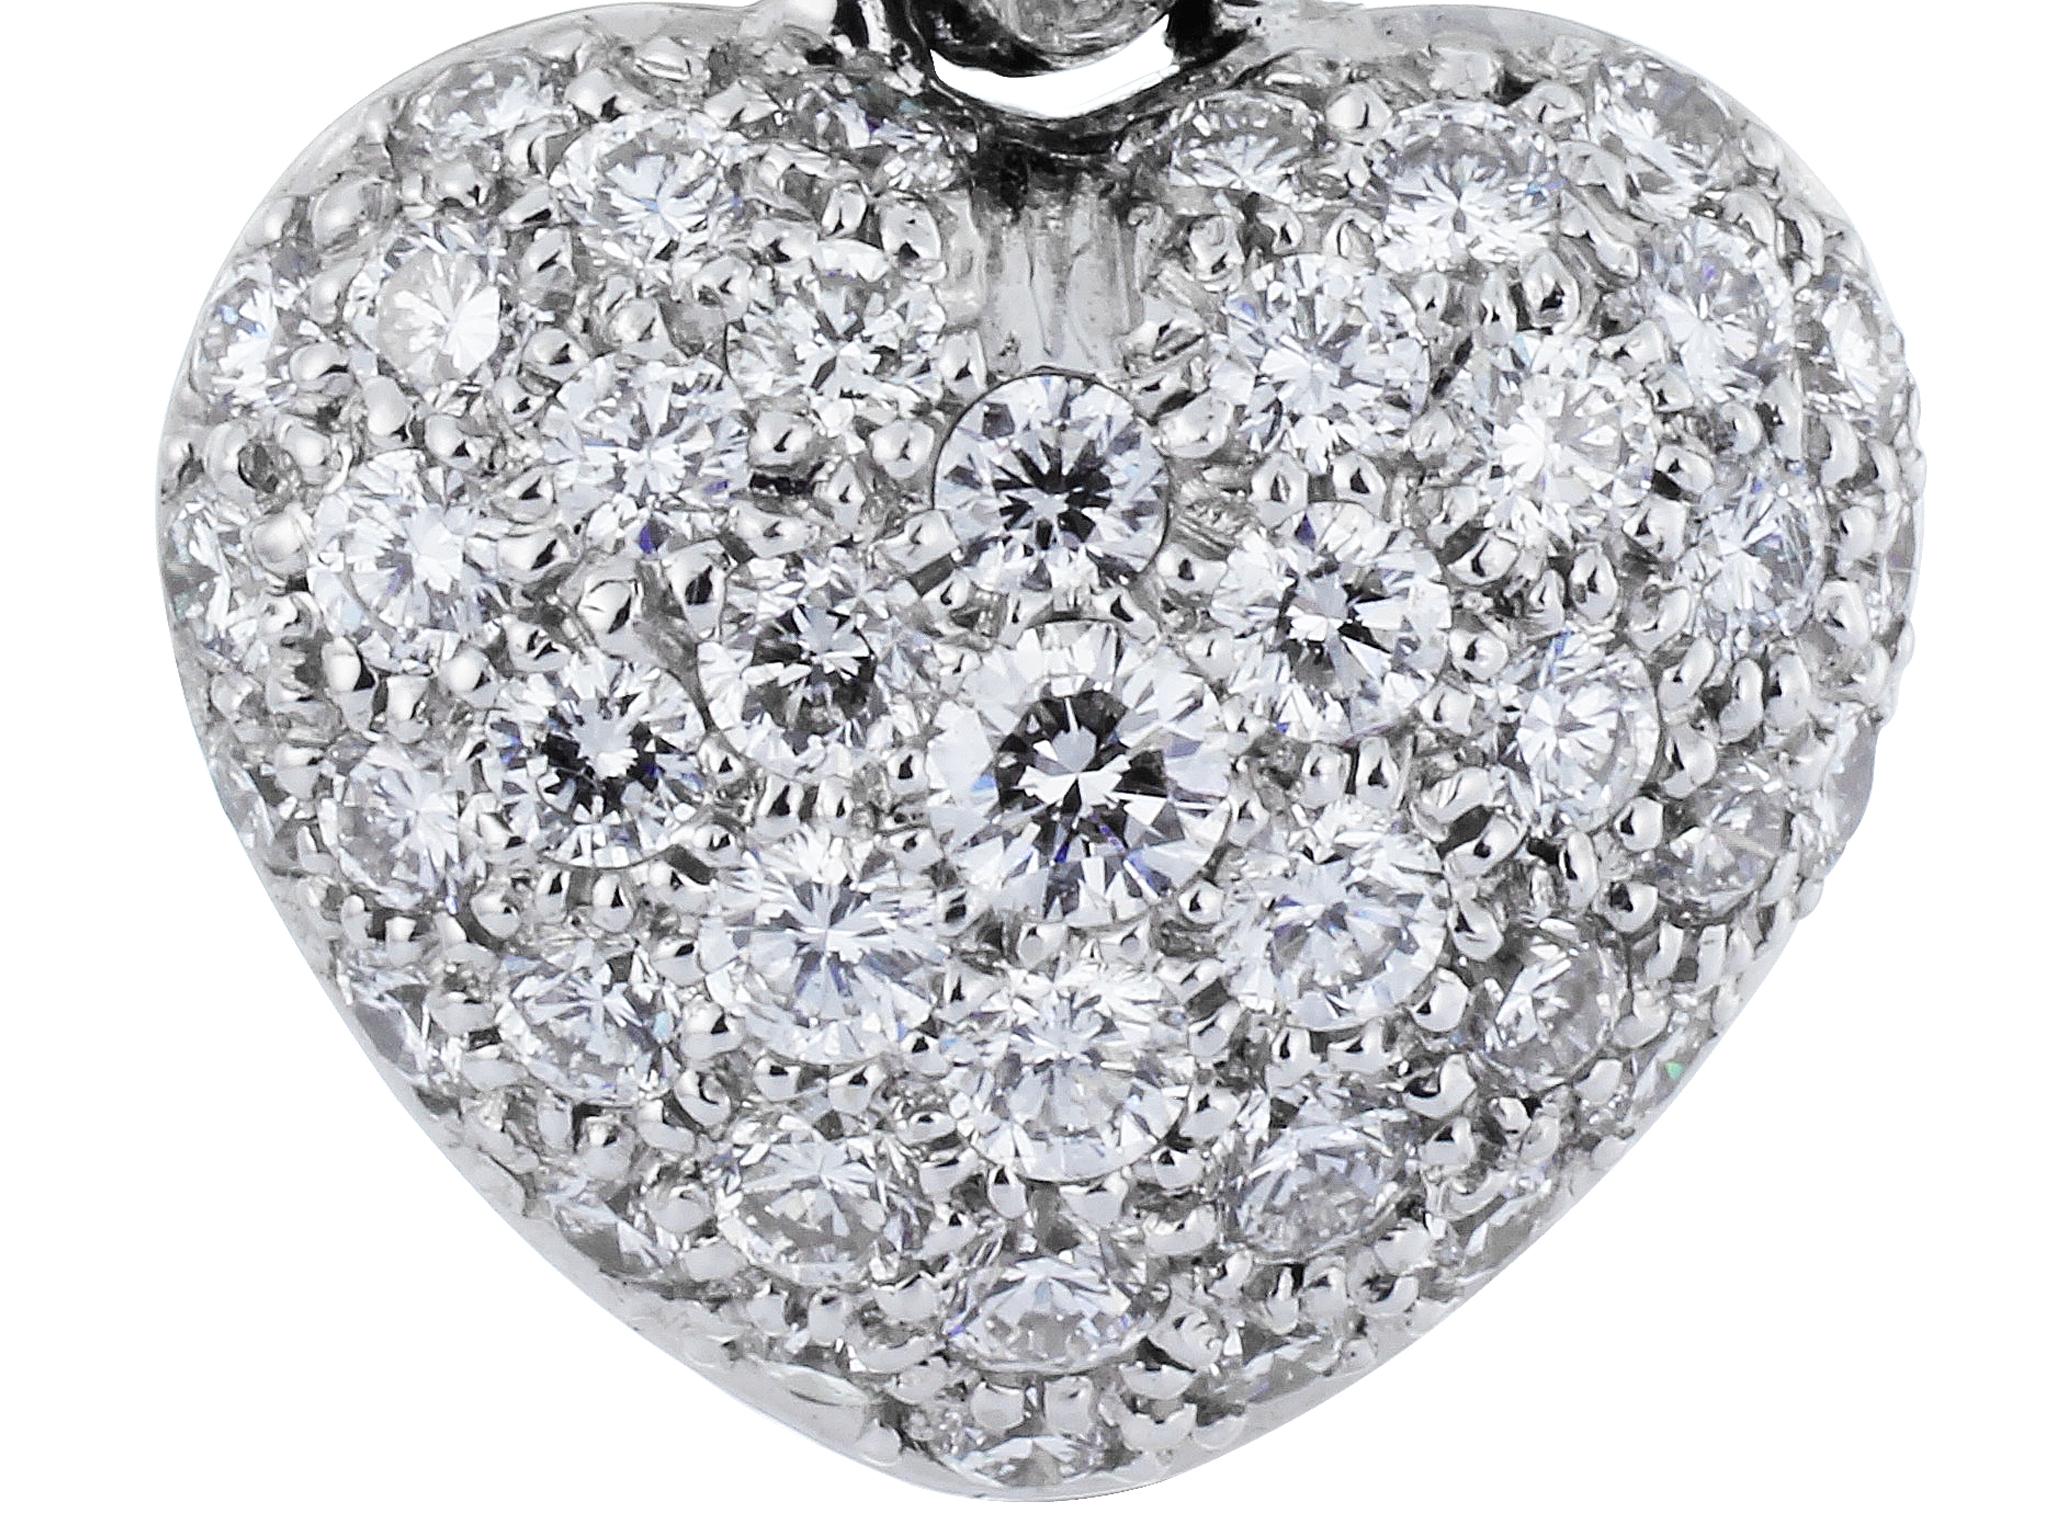 18 Karat white gold heart shape drop earrings consisting of 2.24 carats of full cut pave set diamonds.